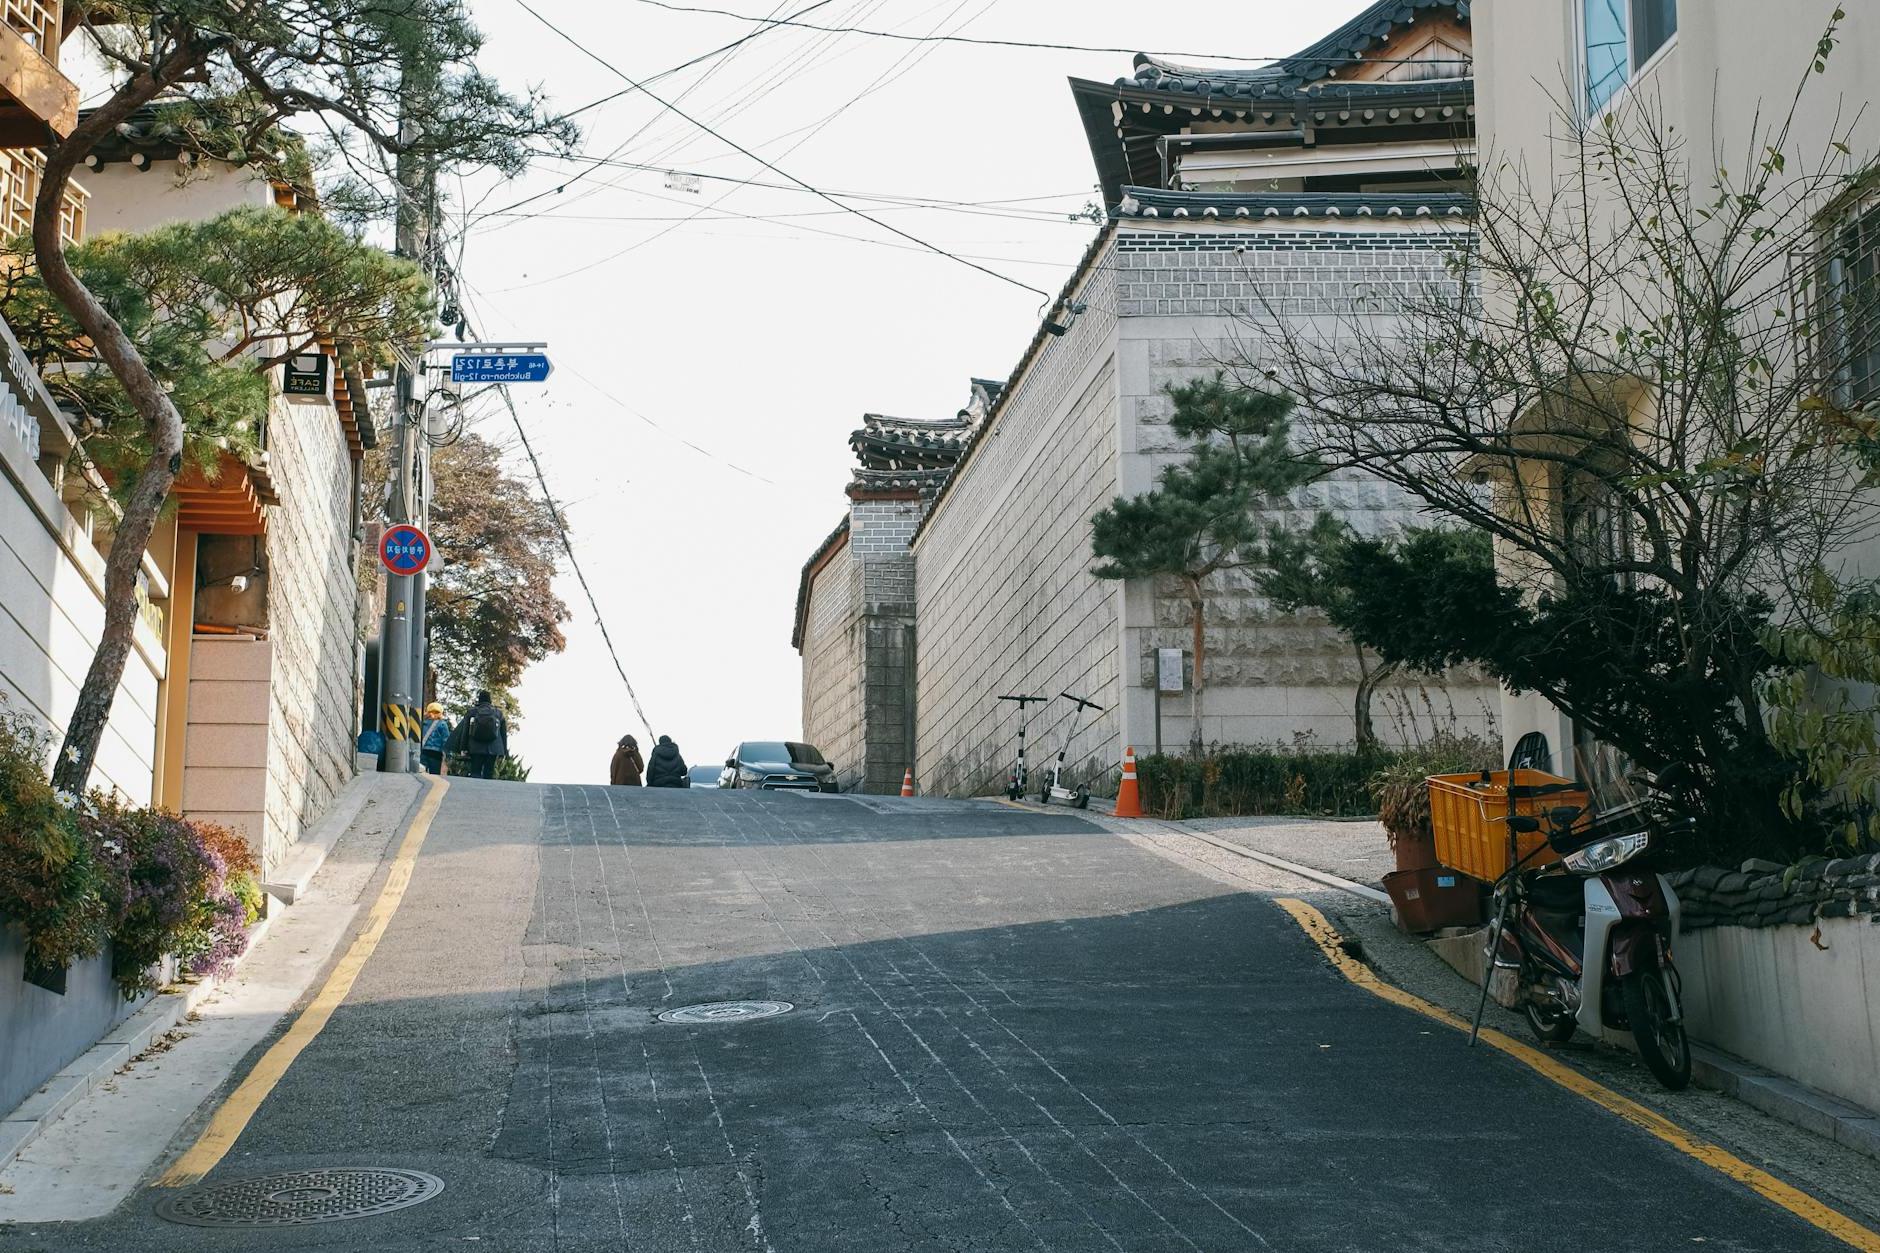 View of an Alley in Bukchon Hanok Village in Seoul, South Korea